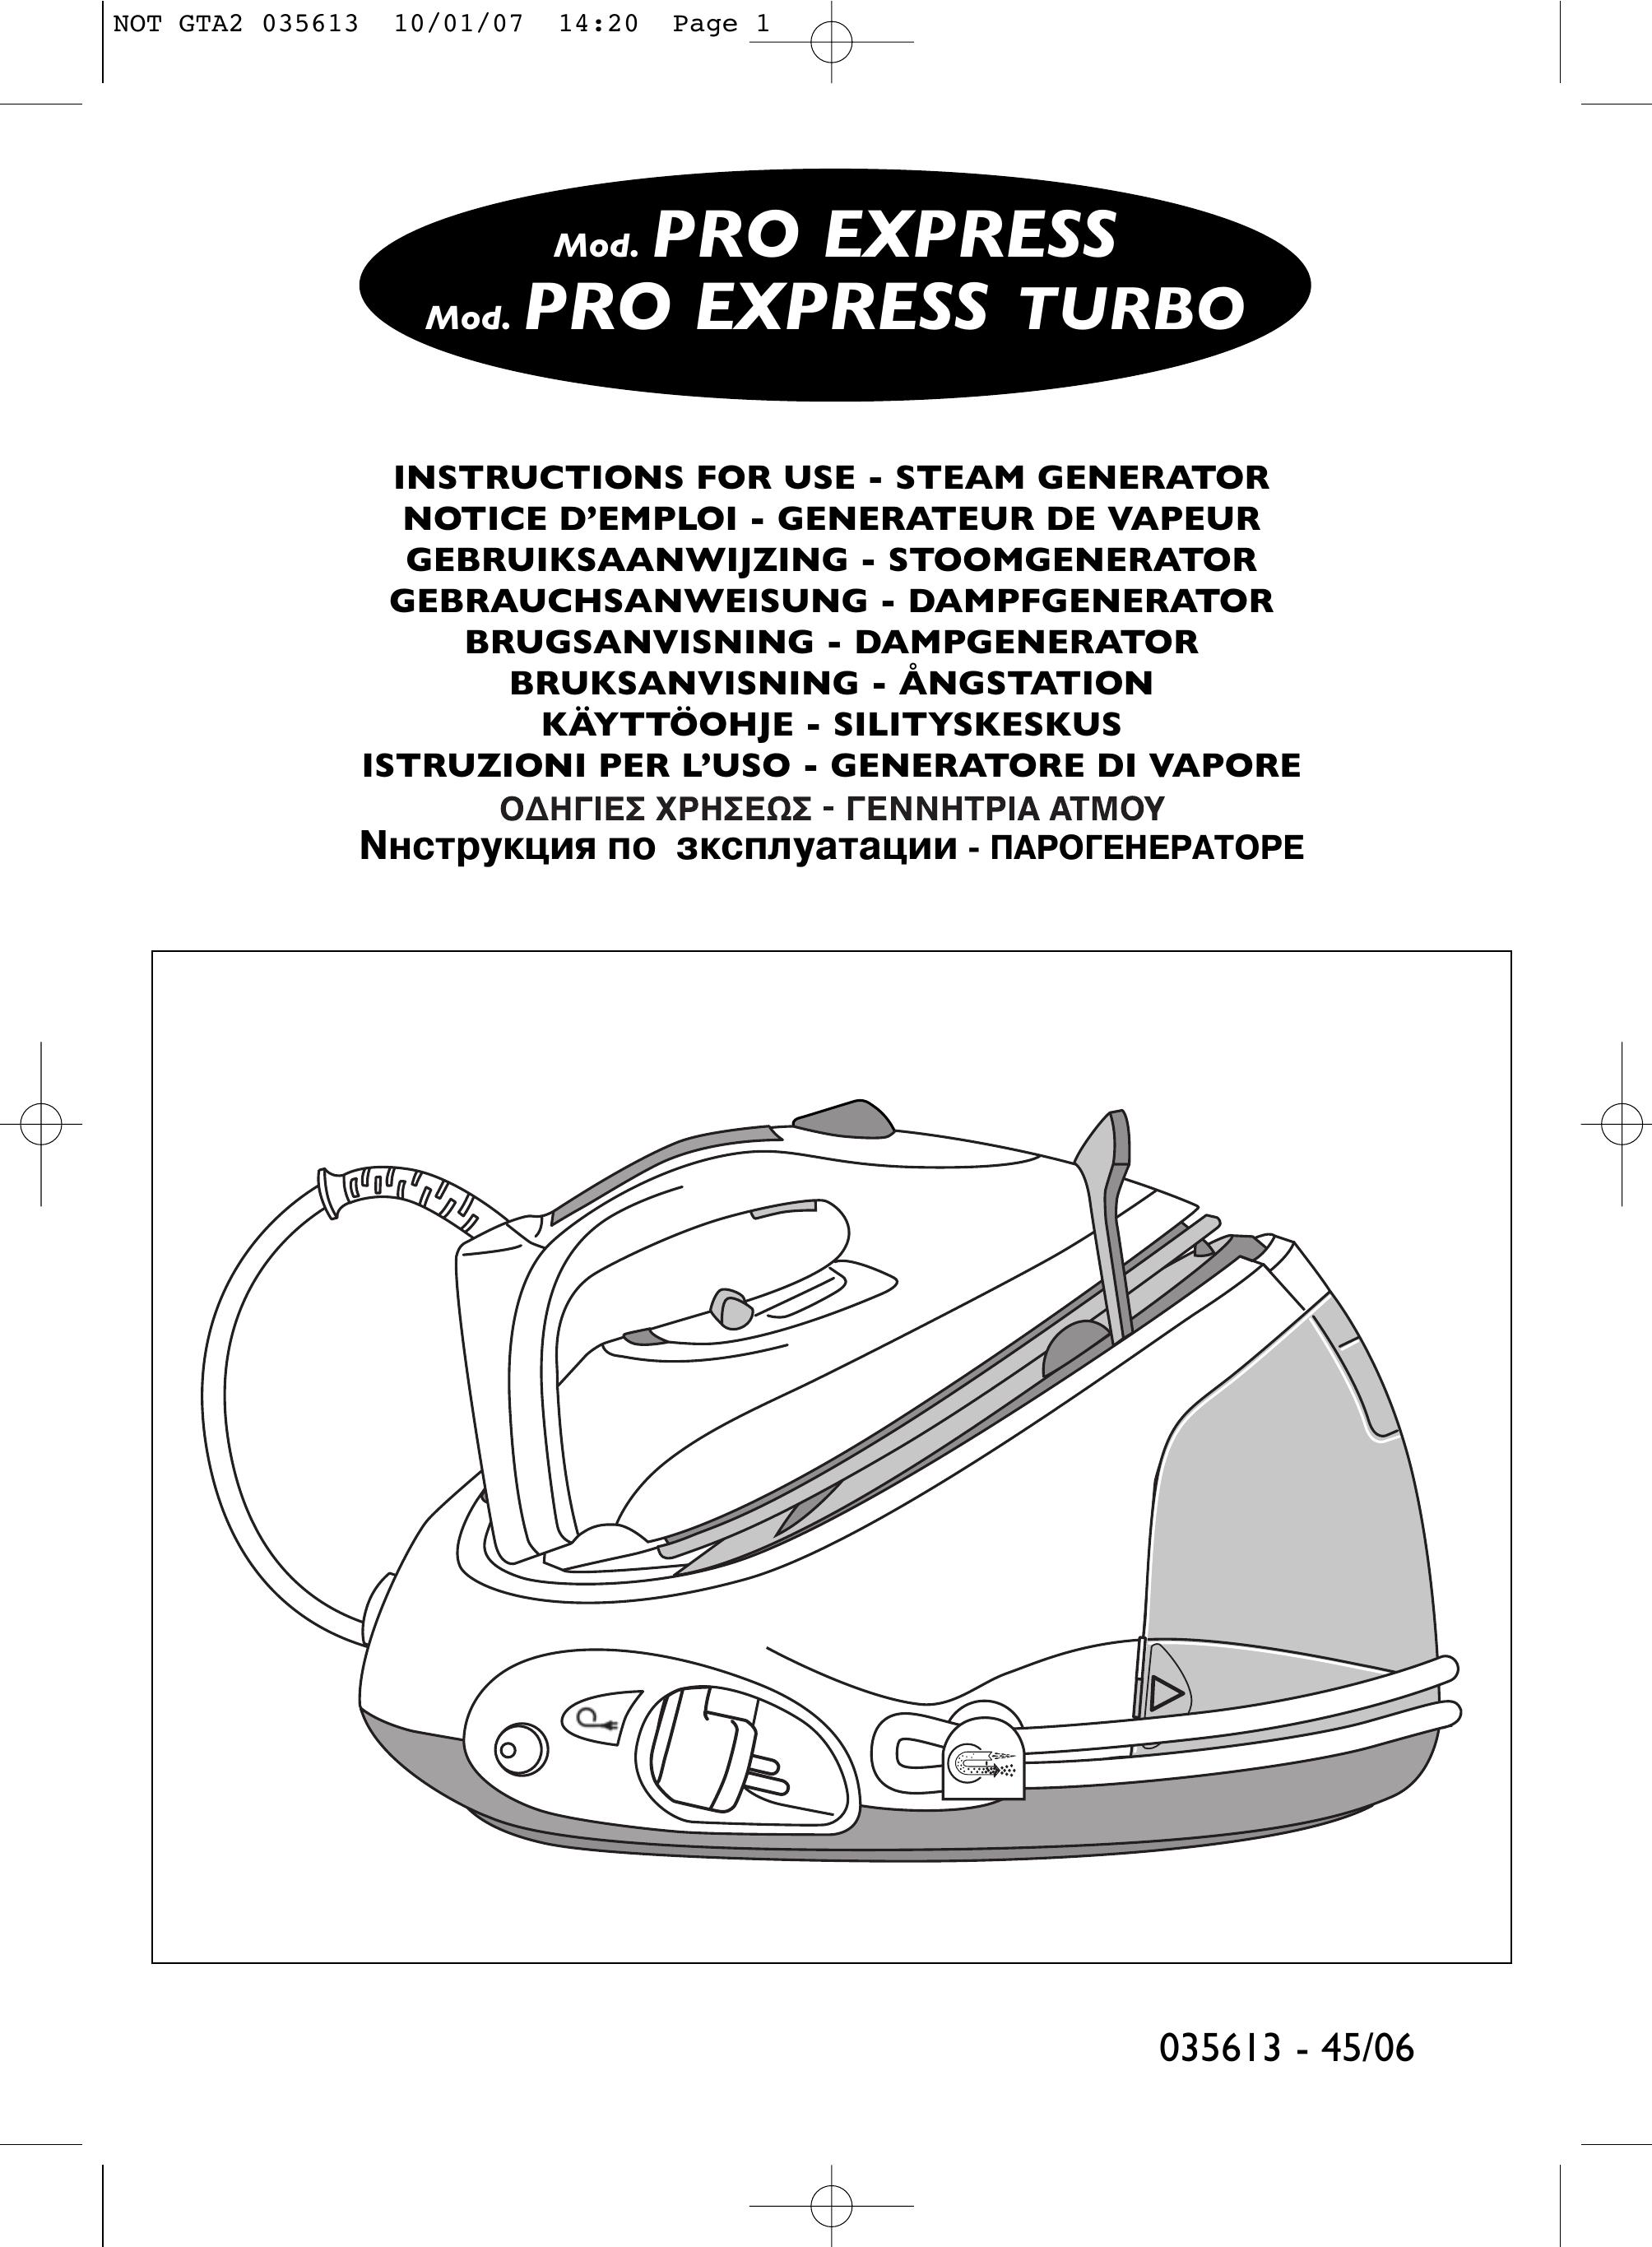 Groupe SEB USA - T-FAL PRO EXPRESS Iron User Manual